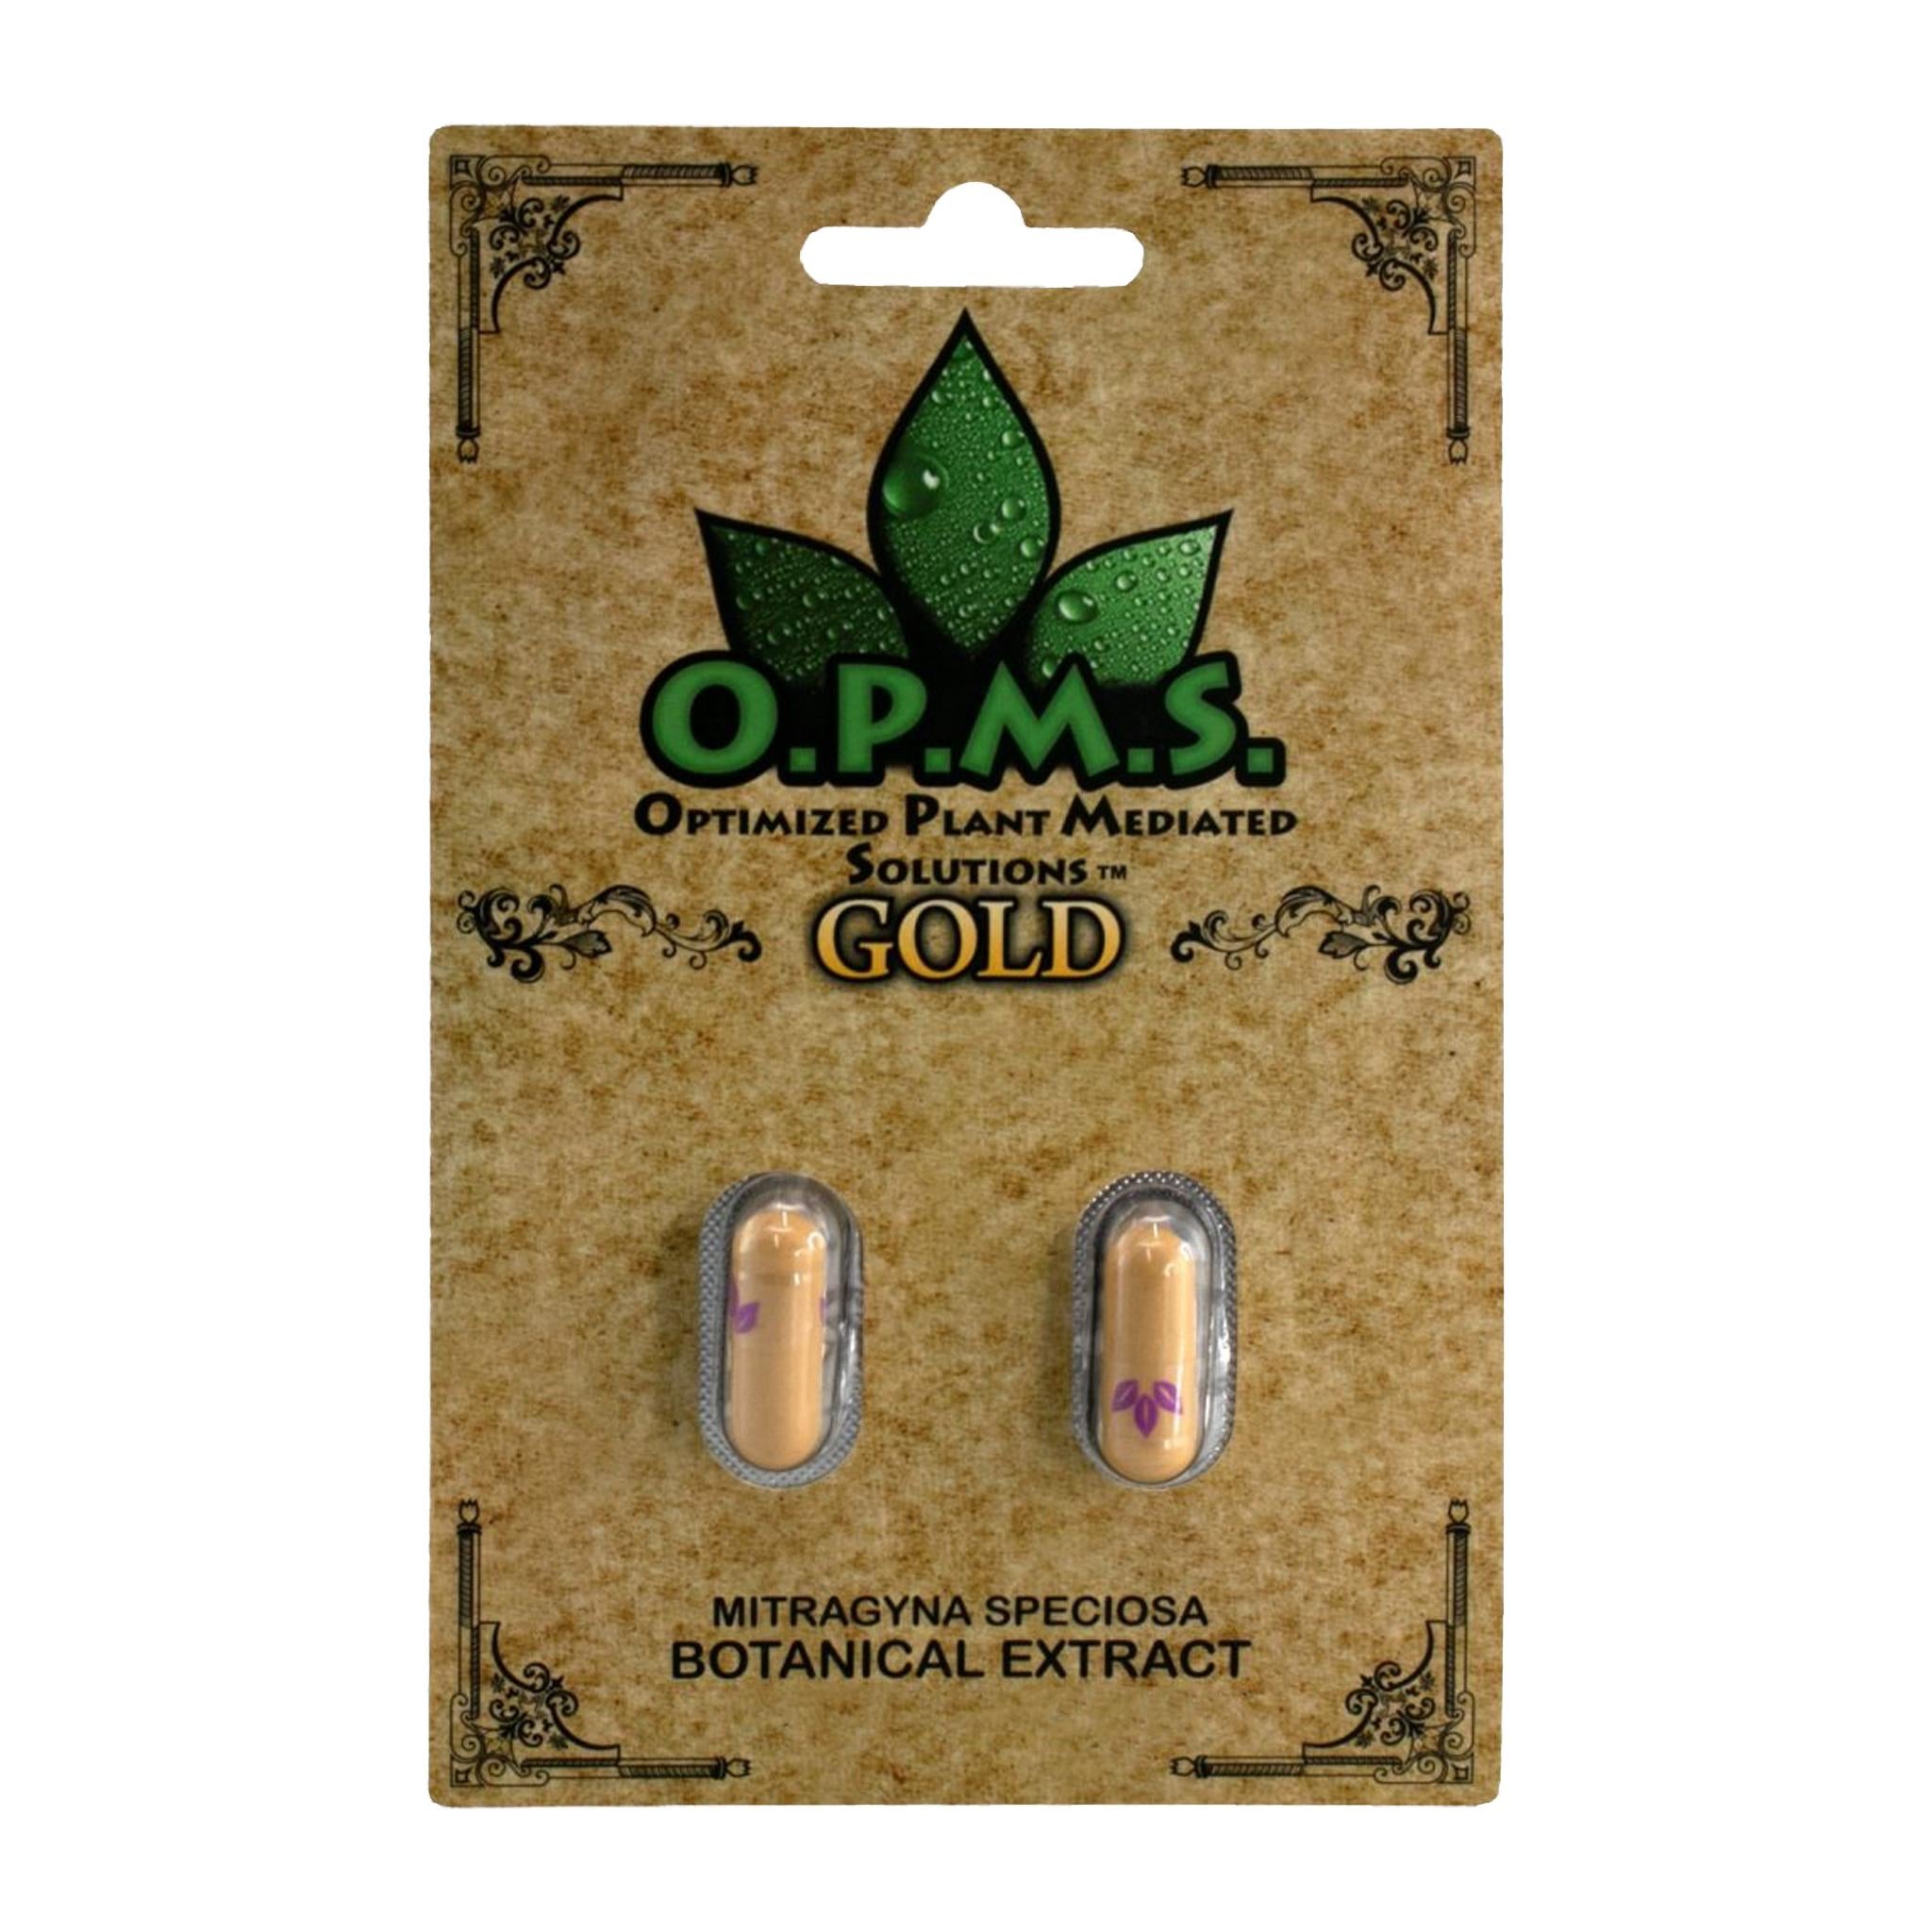 O.P.M.S. Gold Kratom Capsules